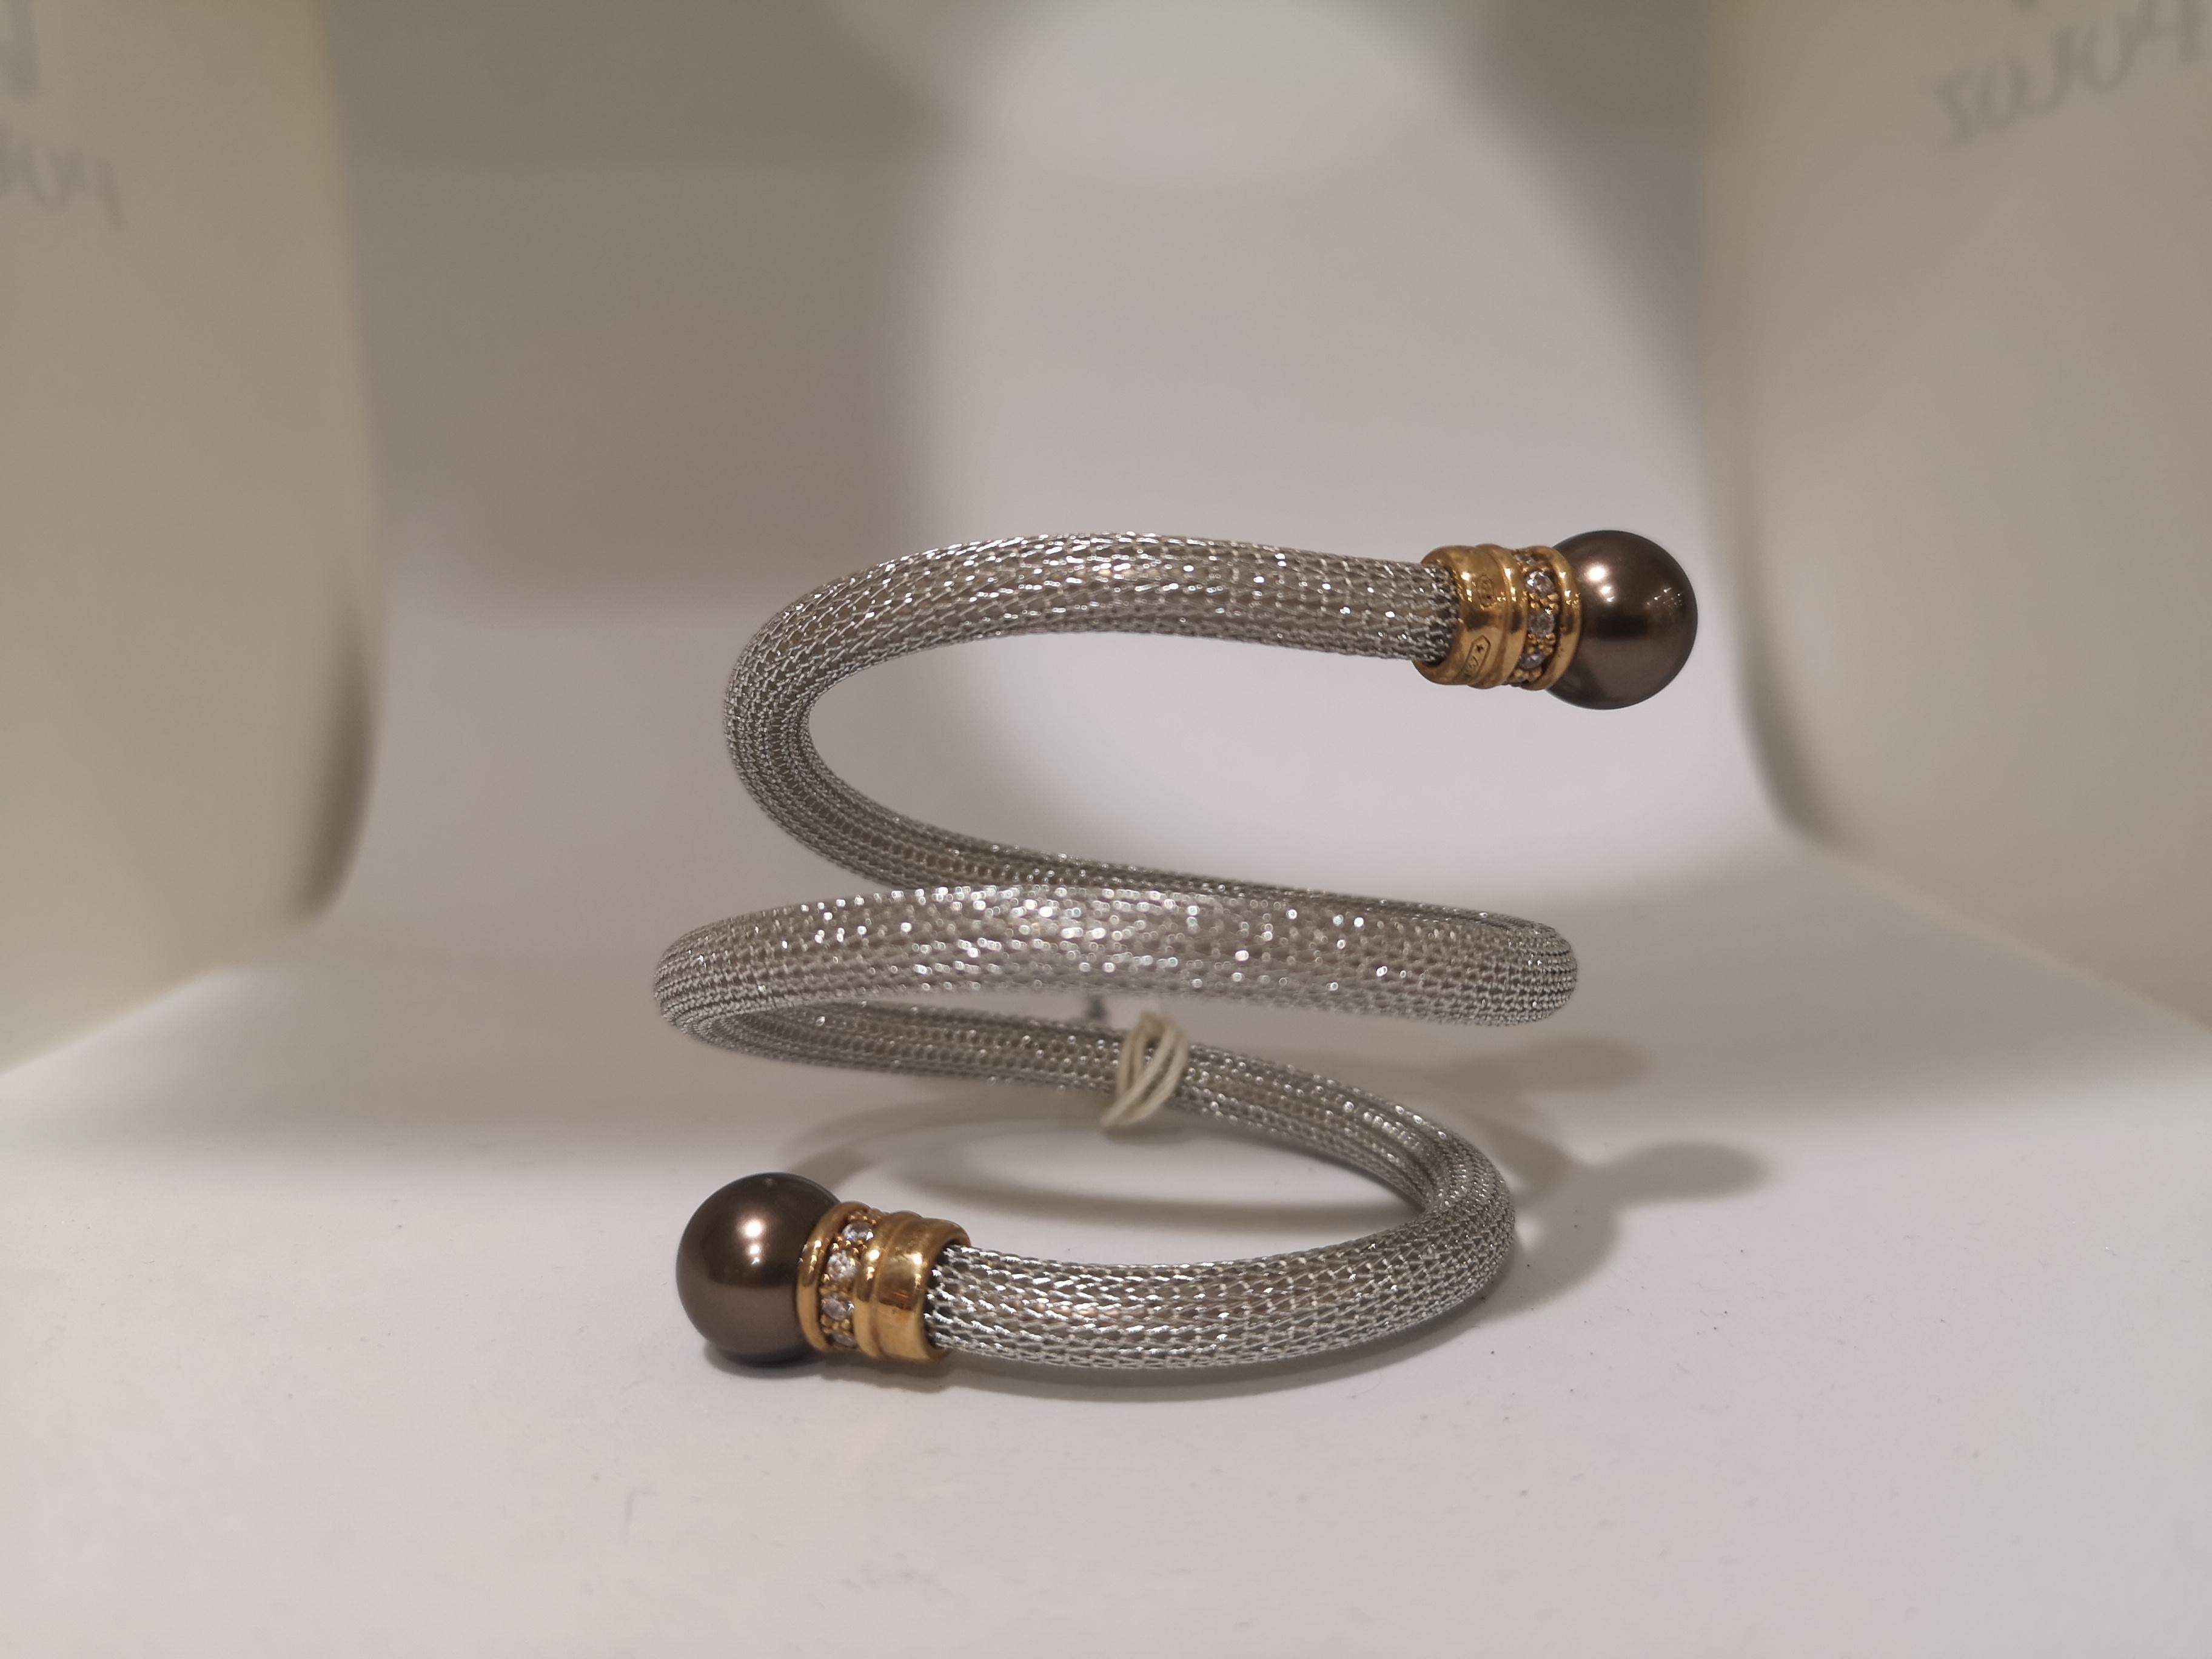 Women's Passavinti silver and faux pearls bracelet NWOT